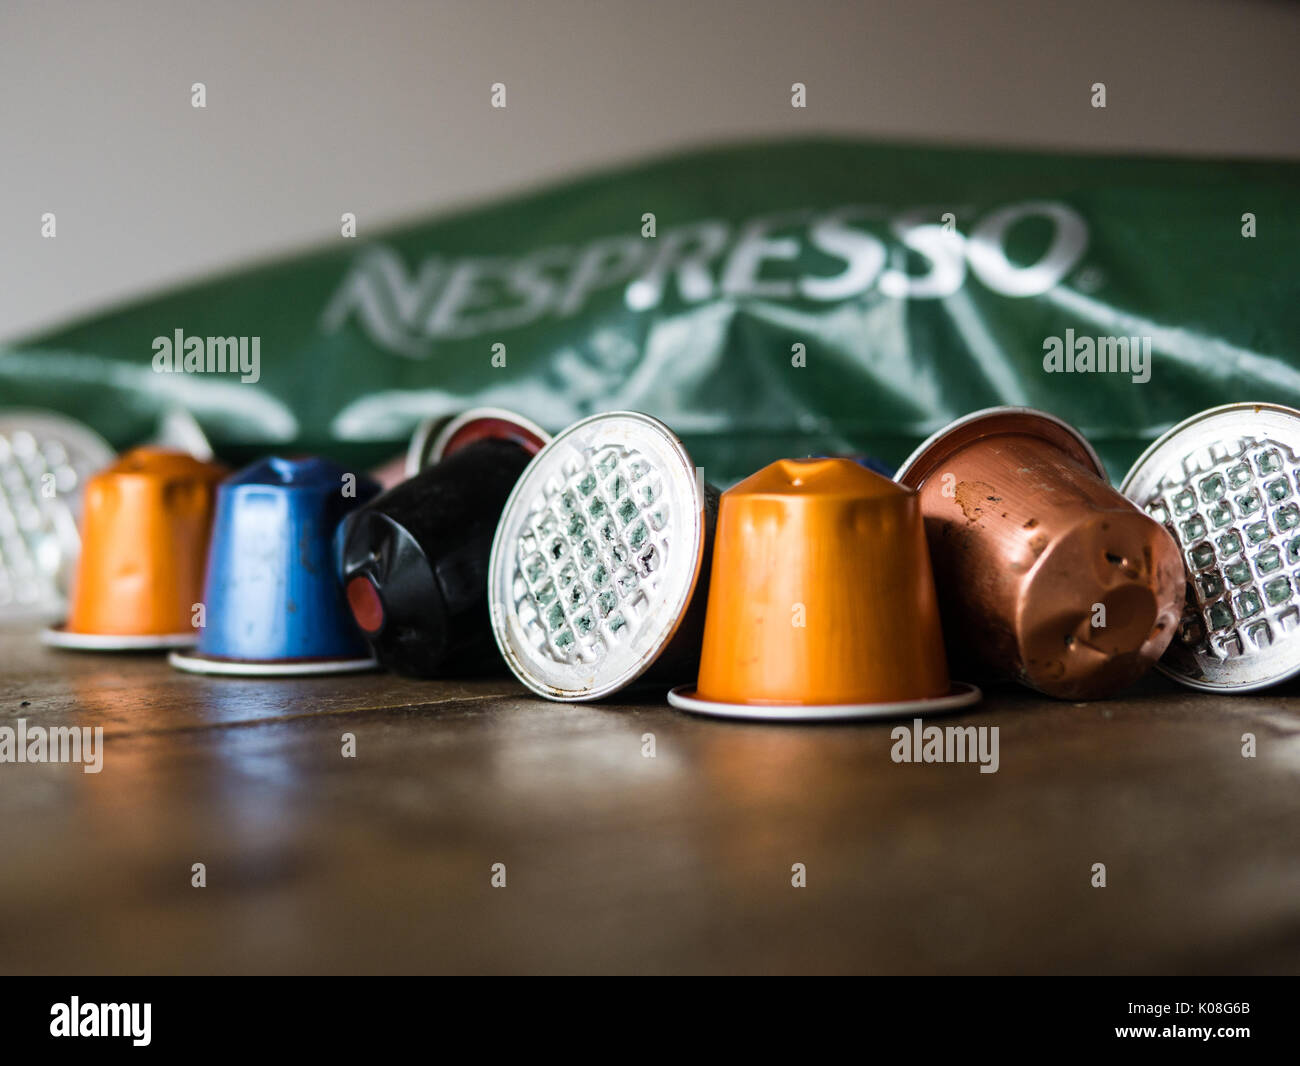 Nespresso Recycling Tasche und Kapseln Stockfotografie - Alamy